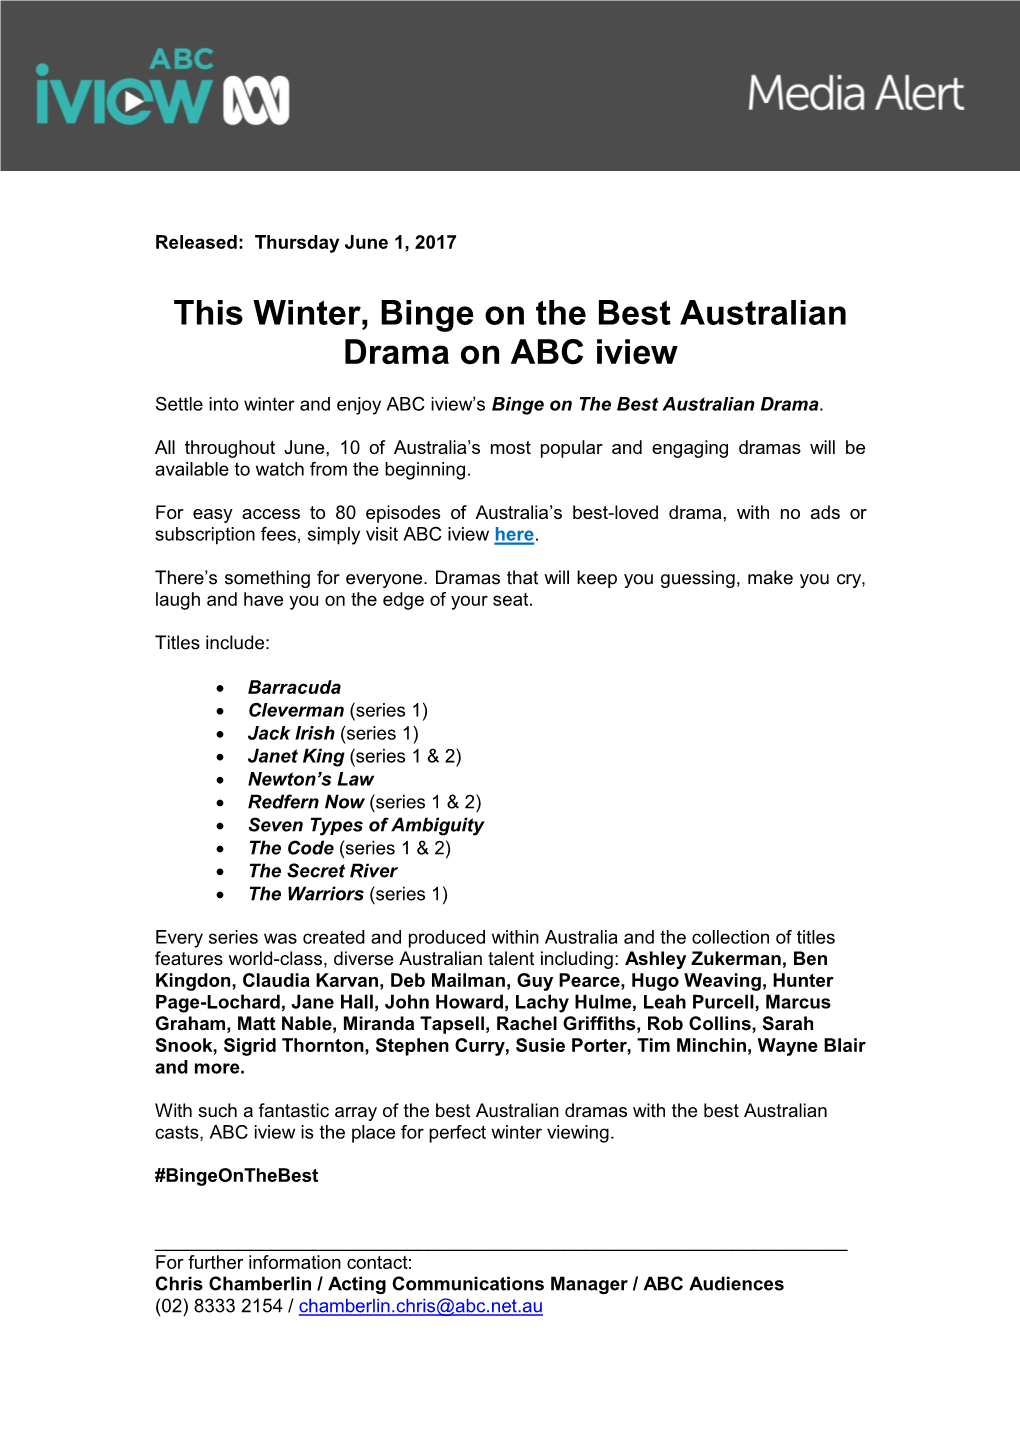 This Winter, Binge on the Best Australian Drama on ABC Iview